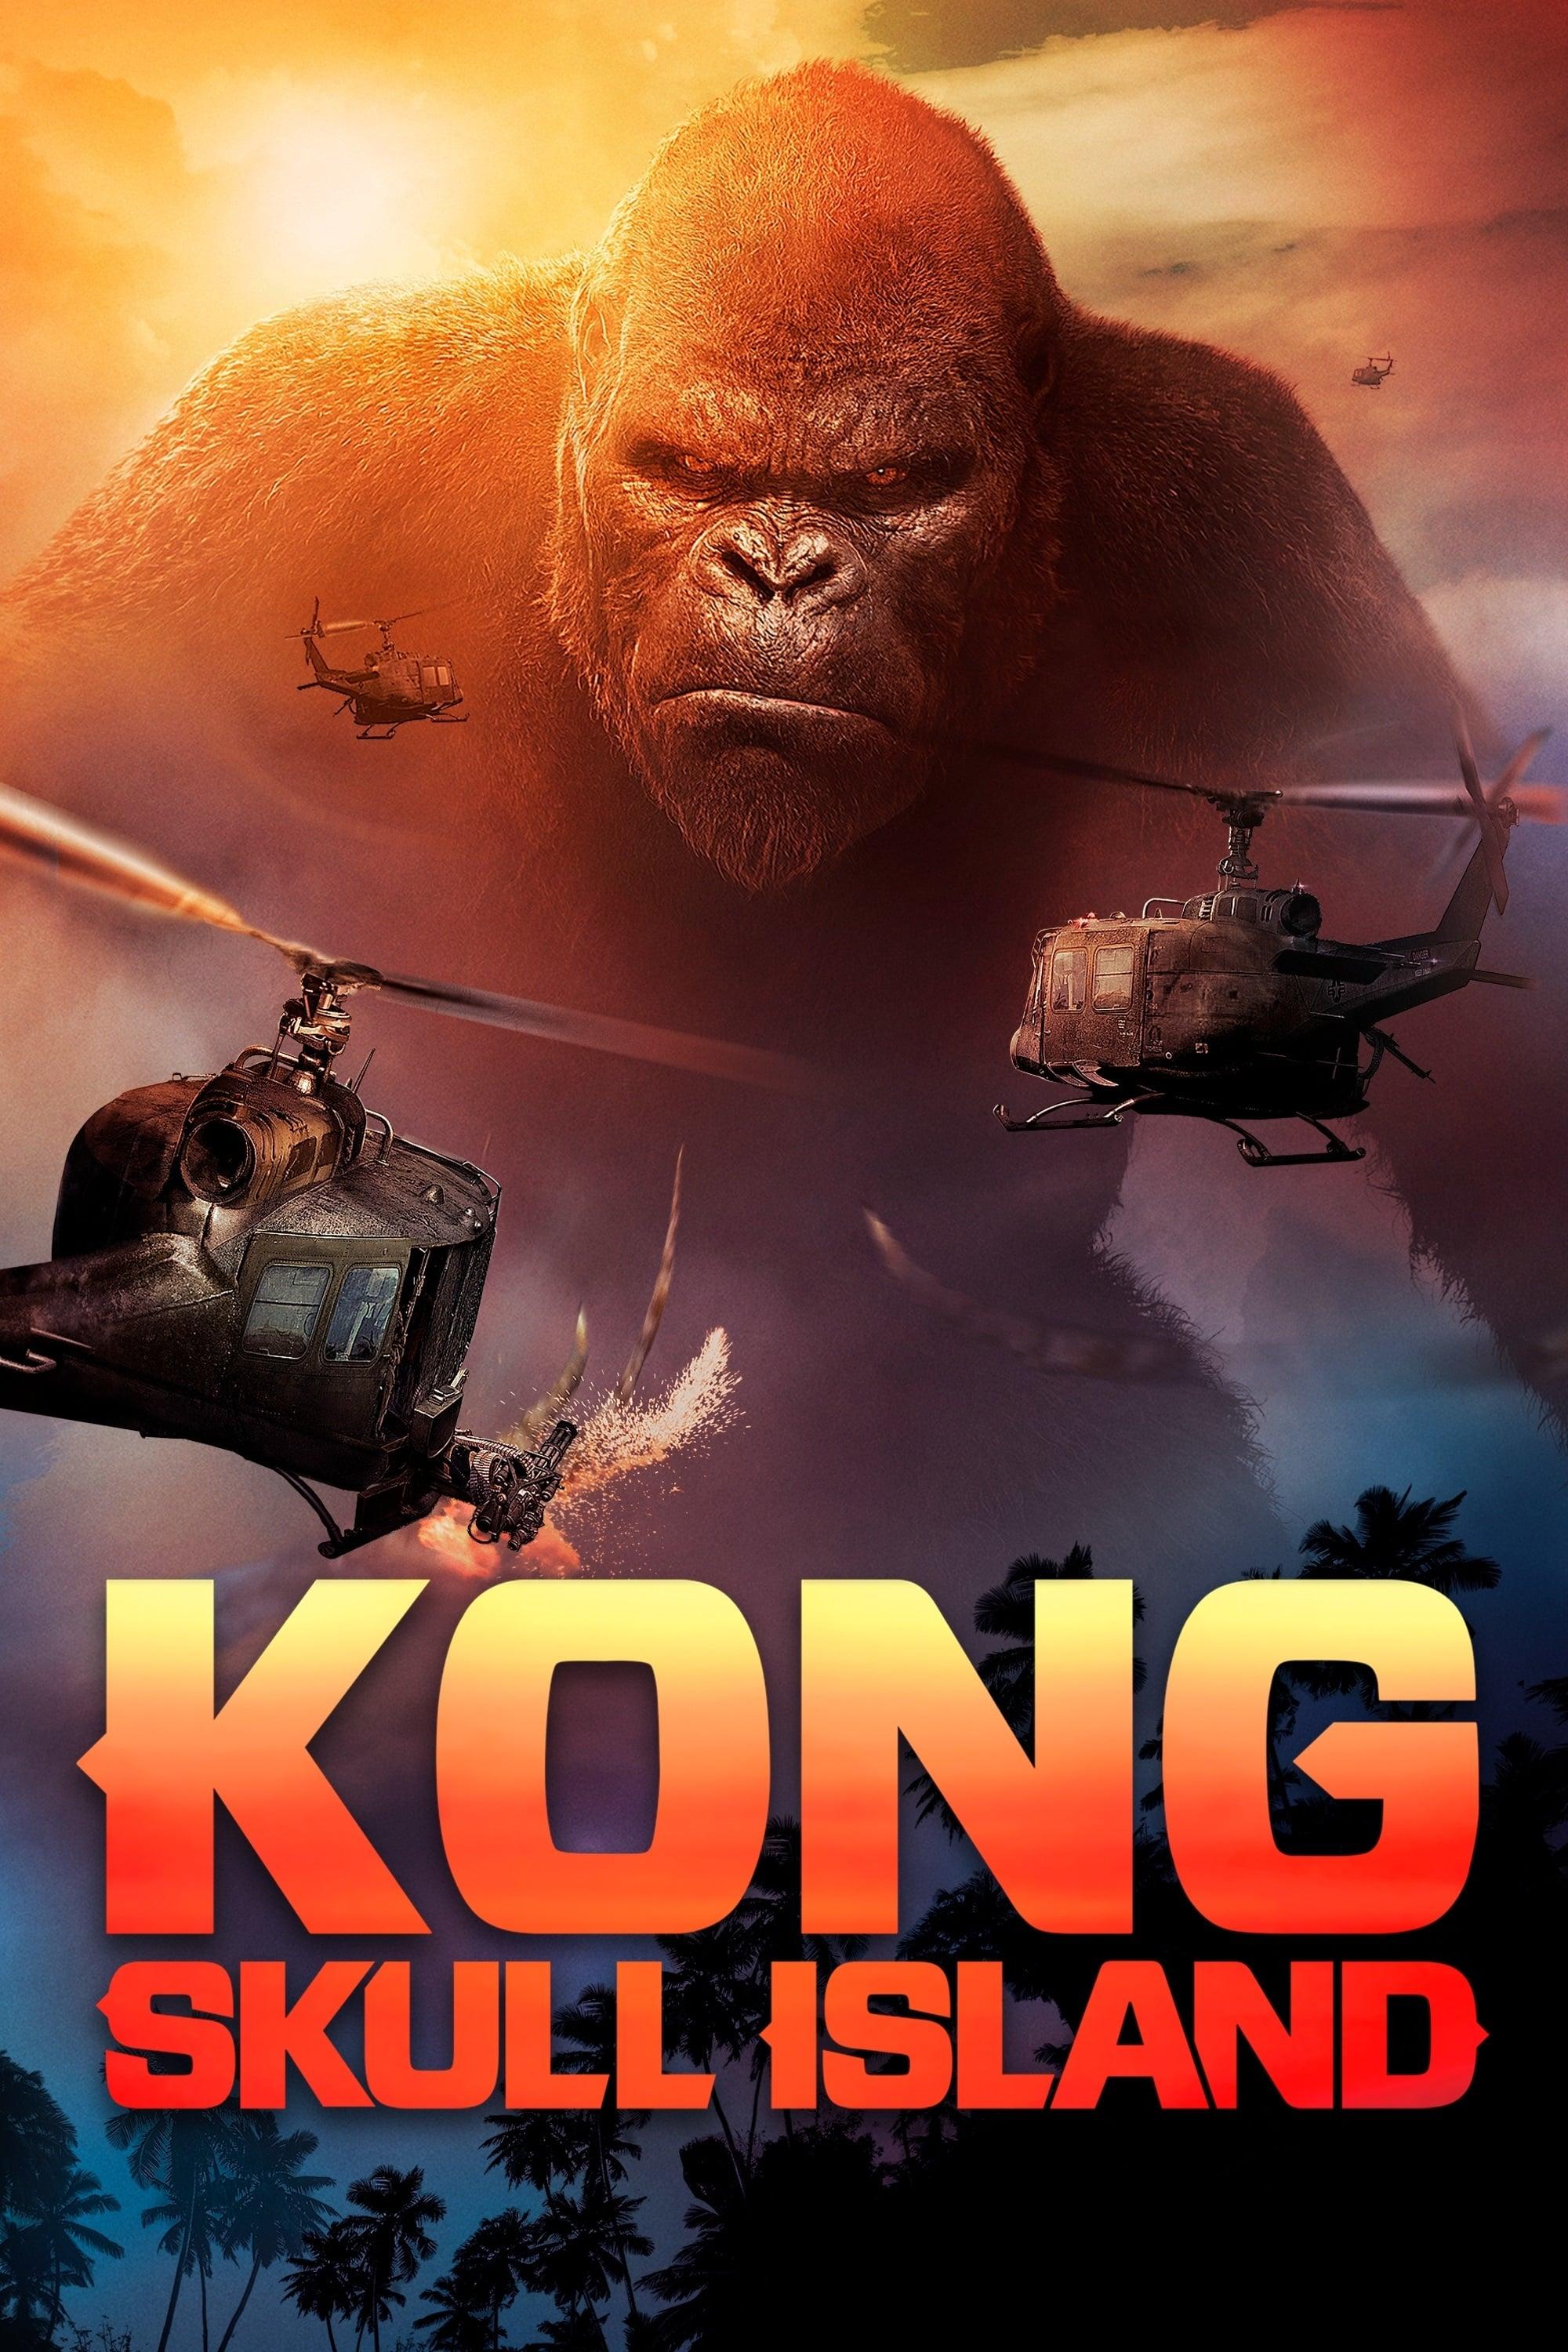 Kong: Skull Island poster